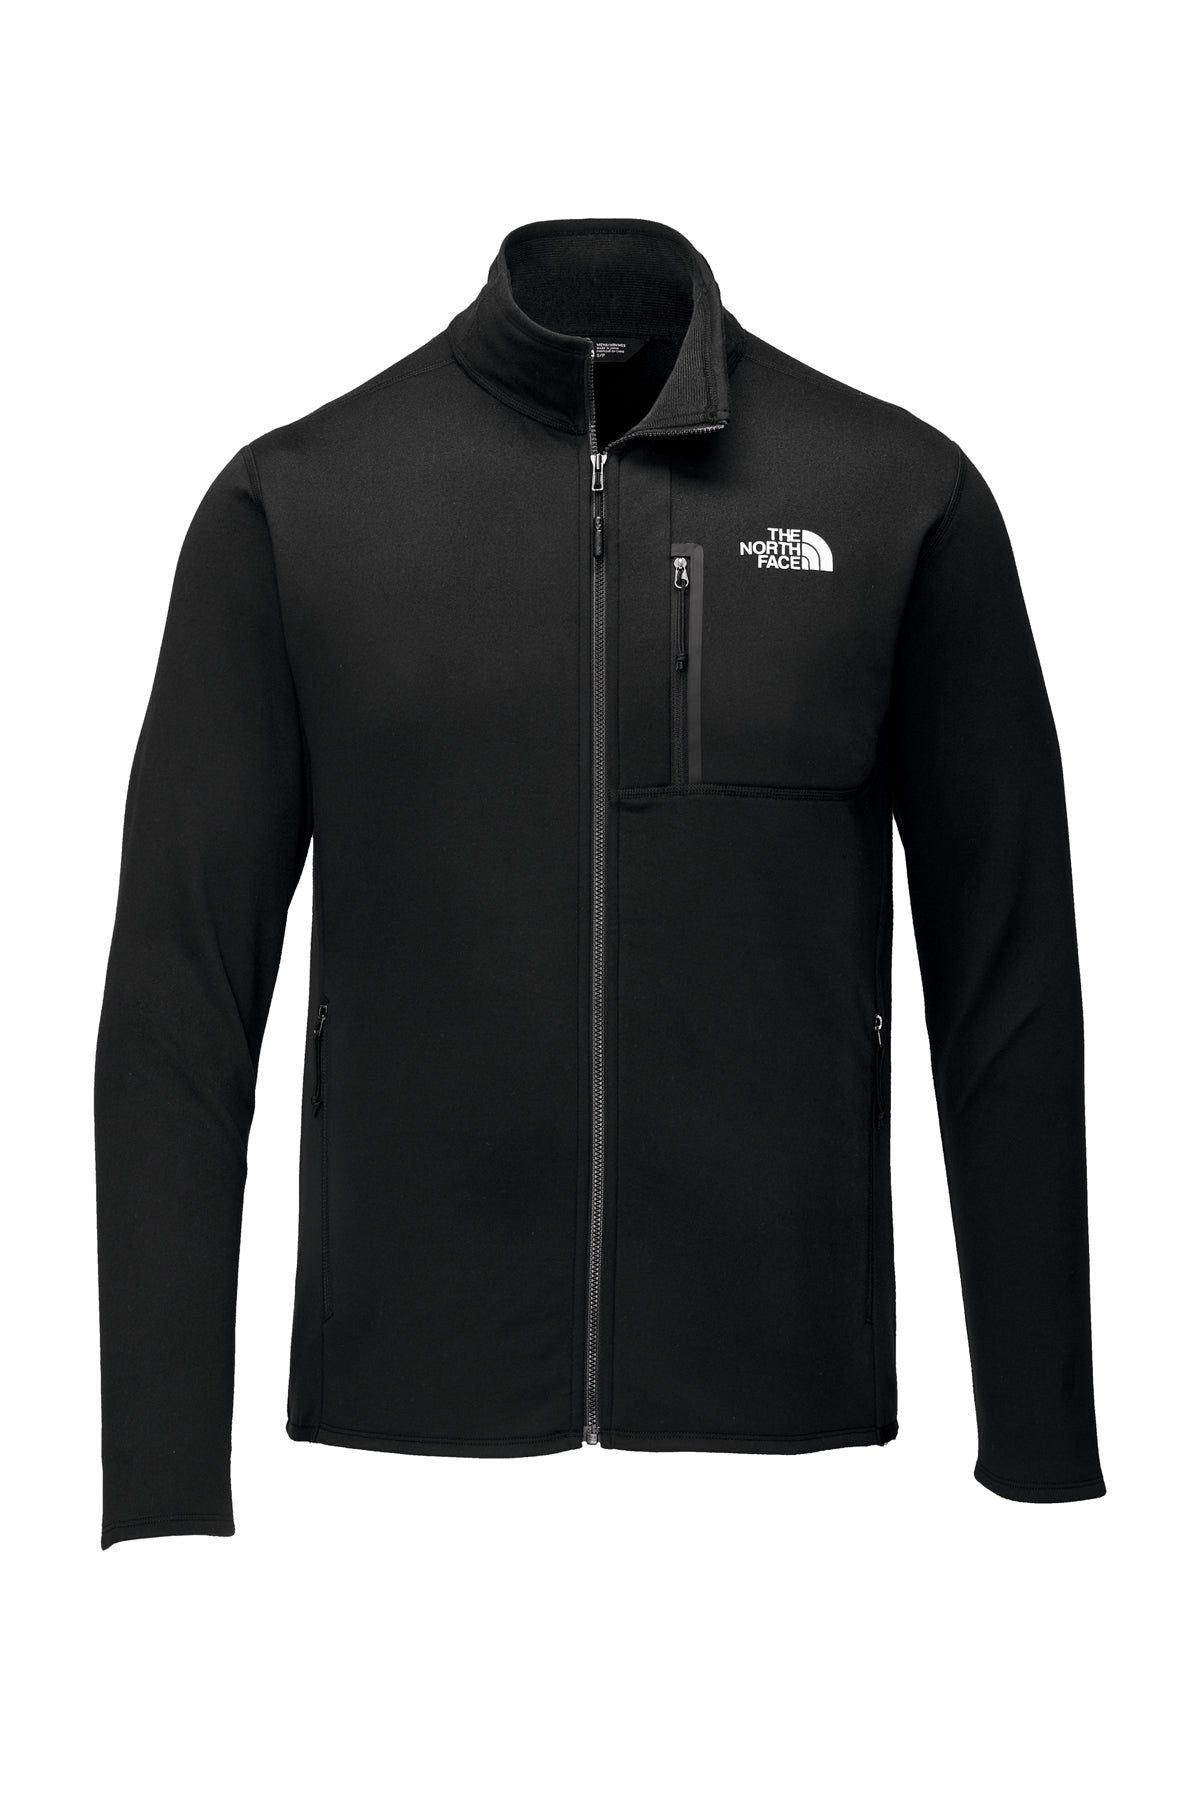 NF0A7V64 The North Face® Skyline Full-Zip Fleece Jacket